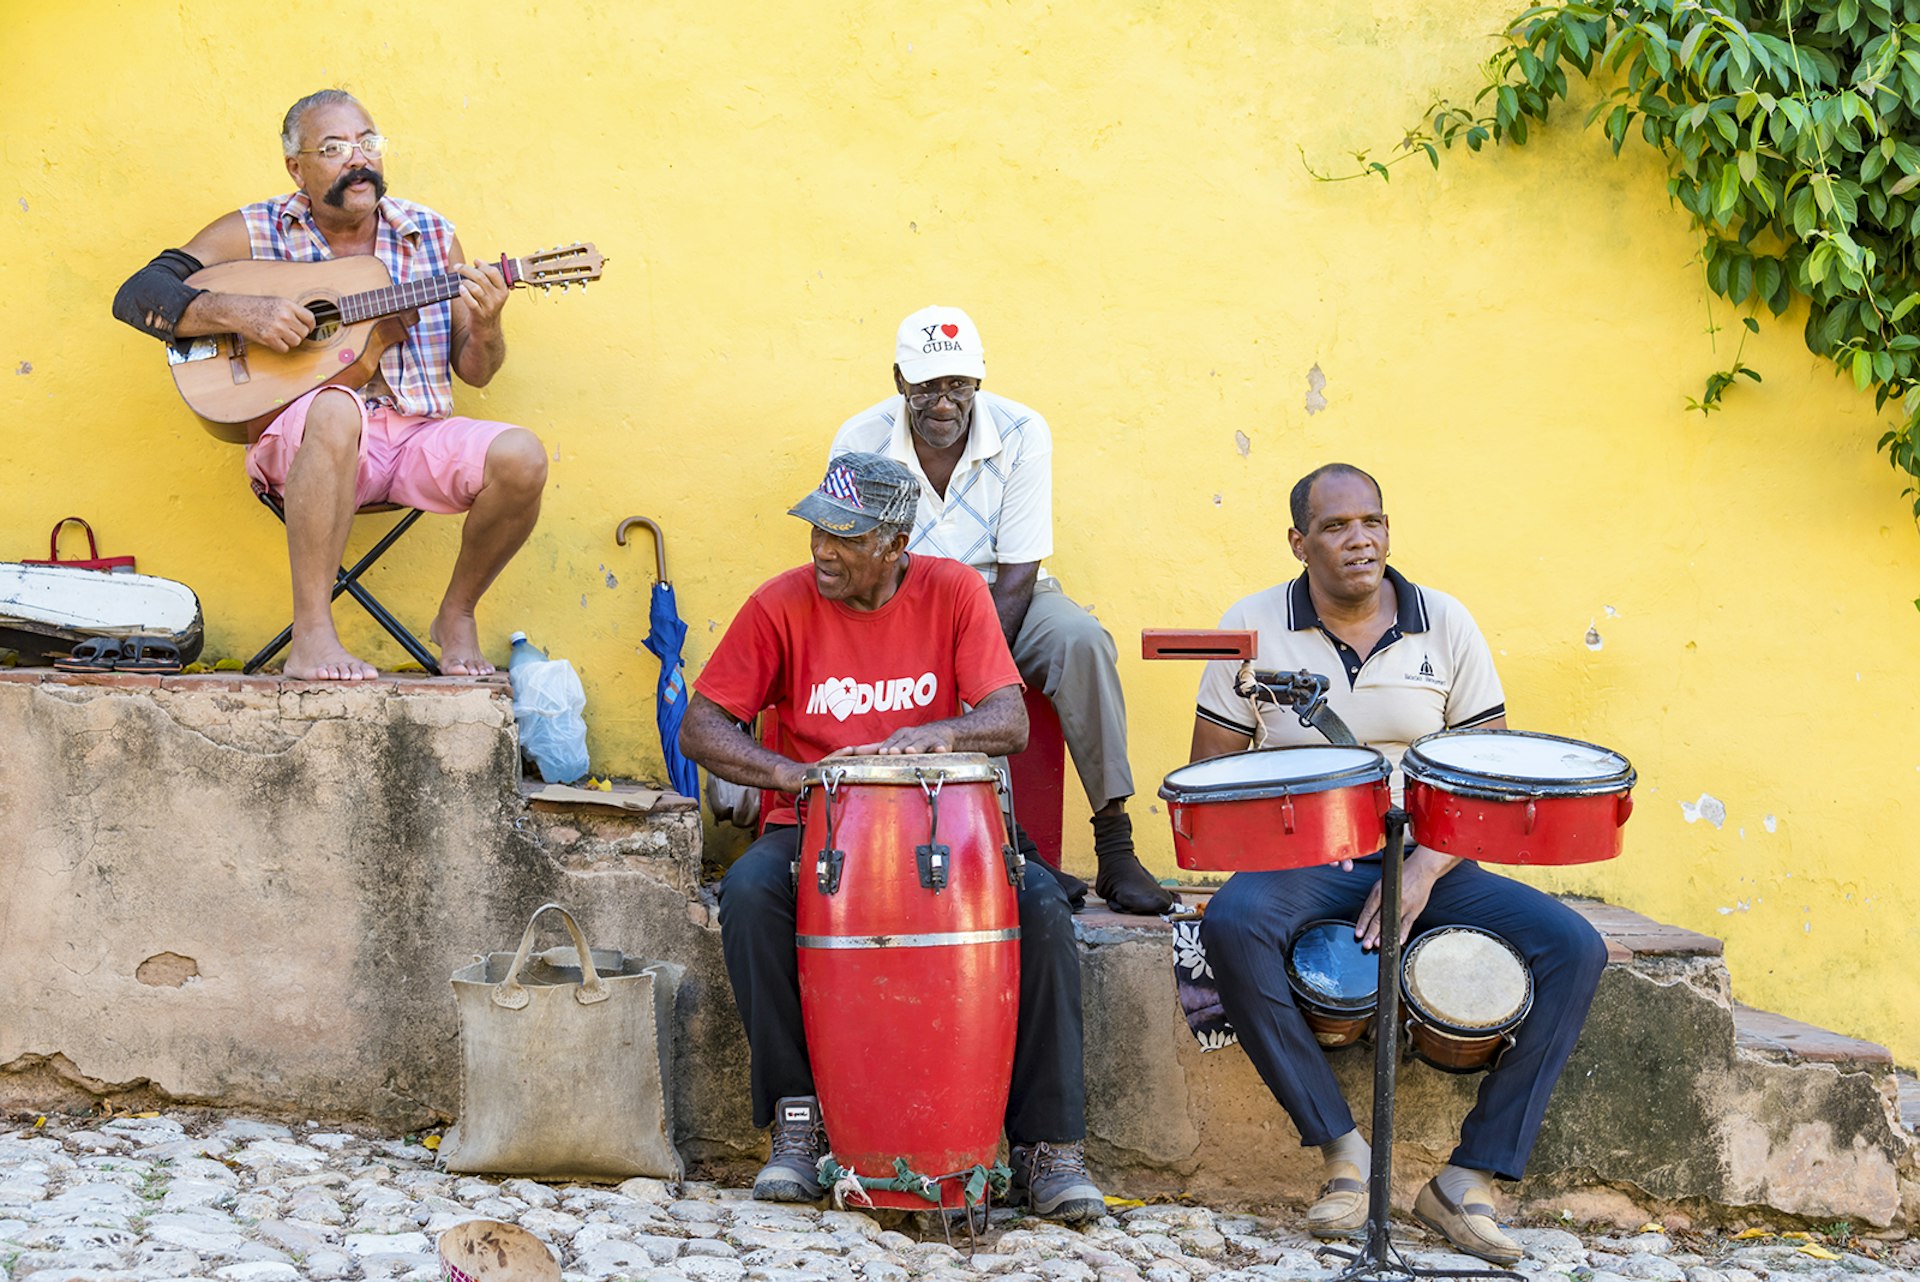 Features - Trinidad de Cuba culture: Traditional musicians playing Son